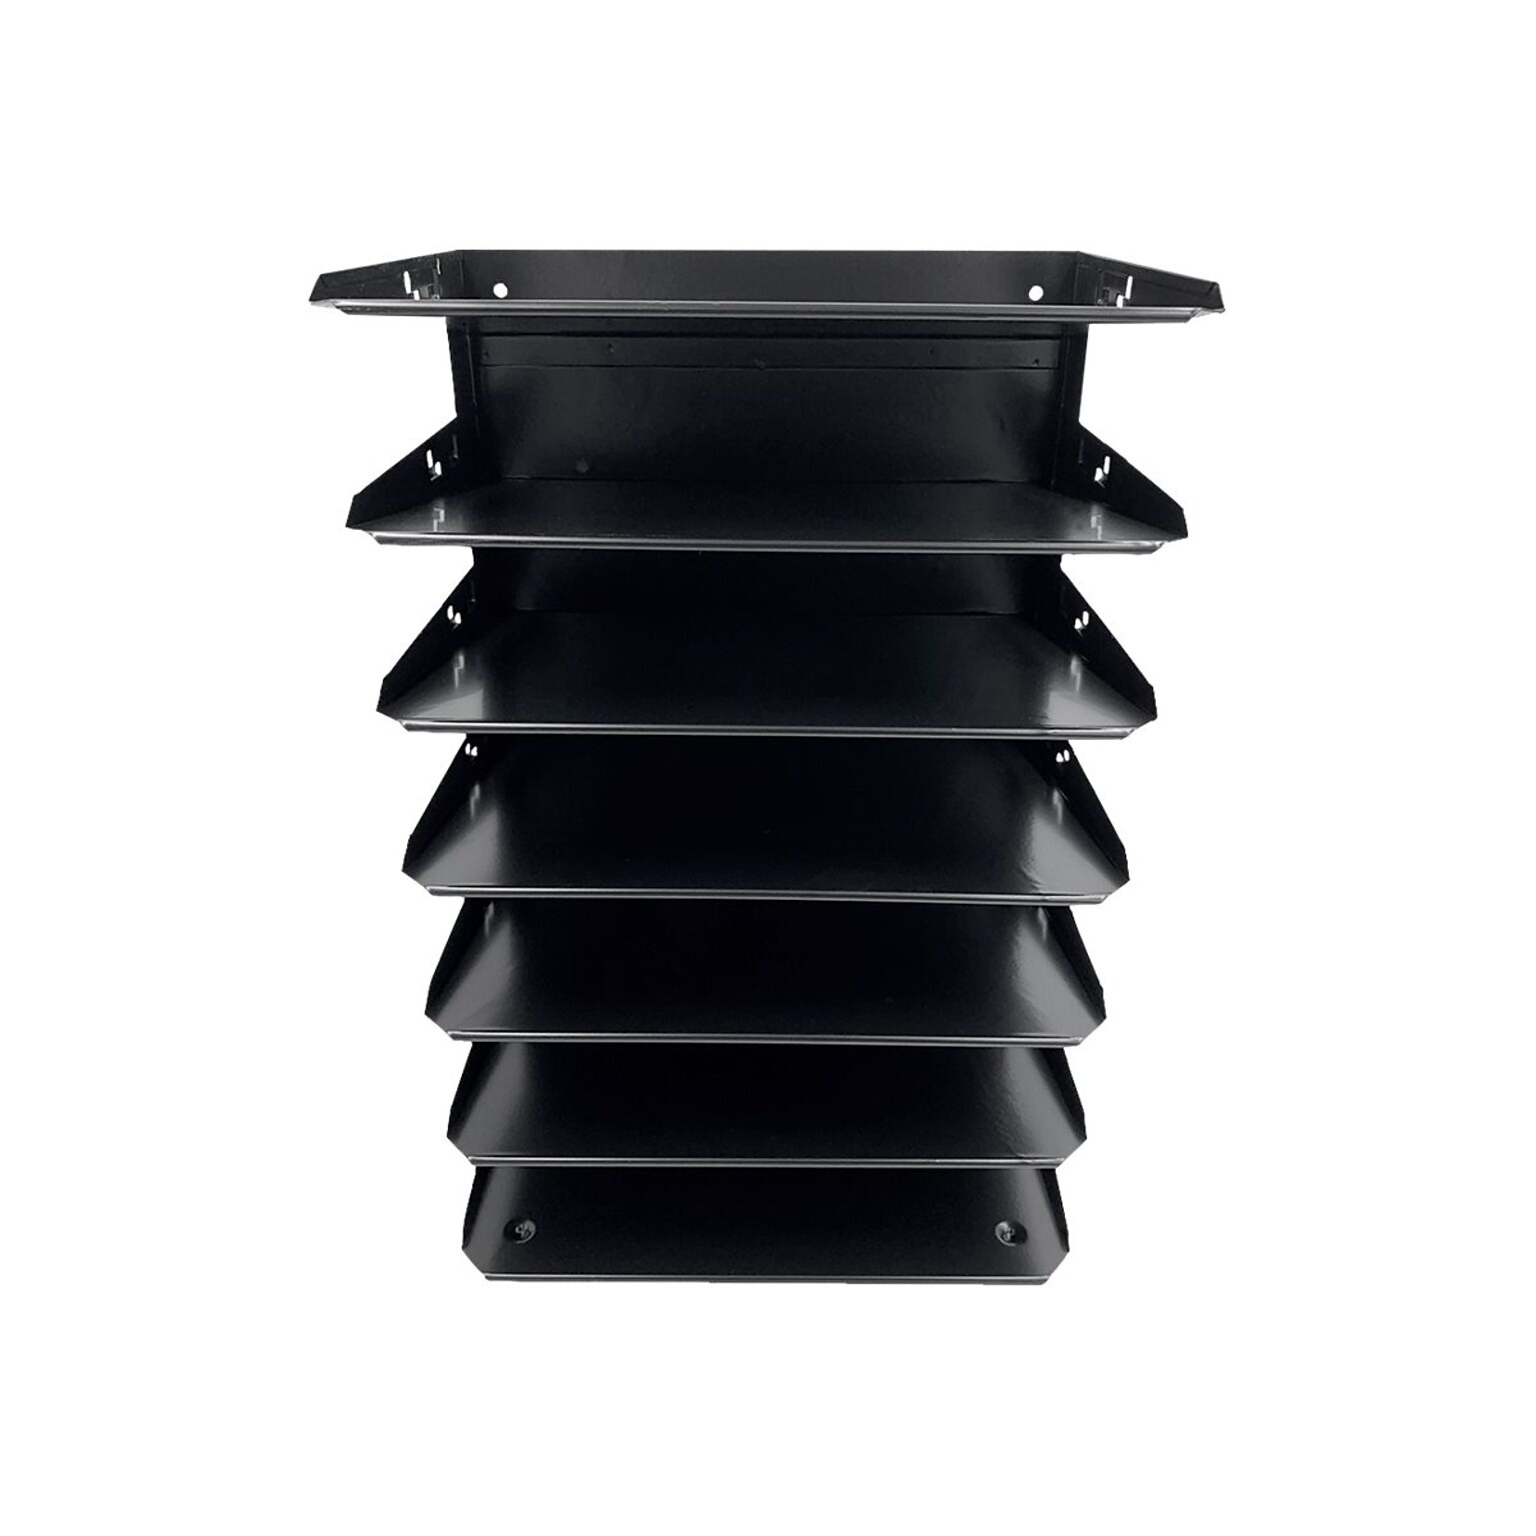 Huron 7-Compartment Steel File Organizer, Black (HASZ0150)